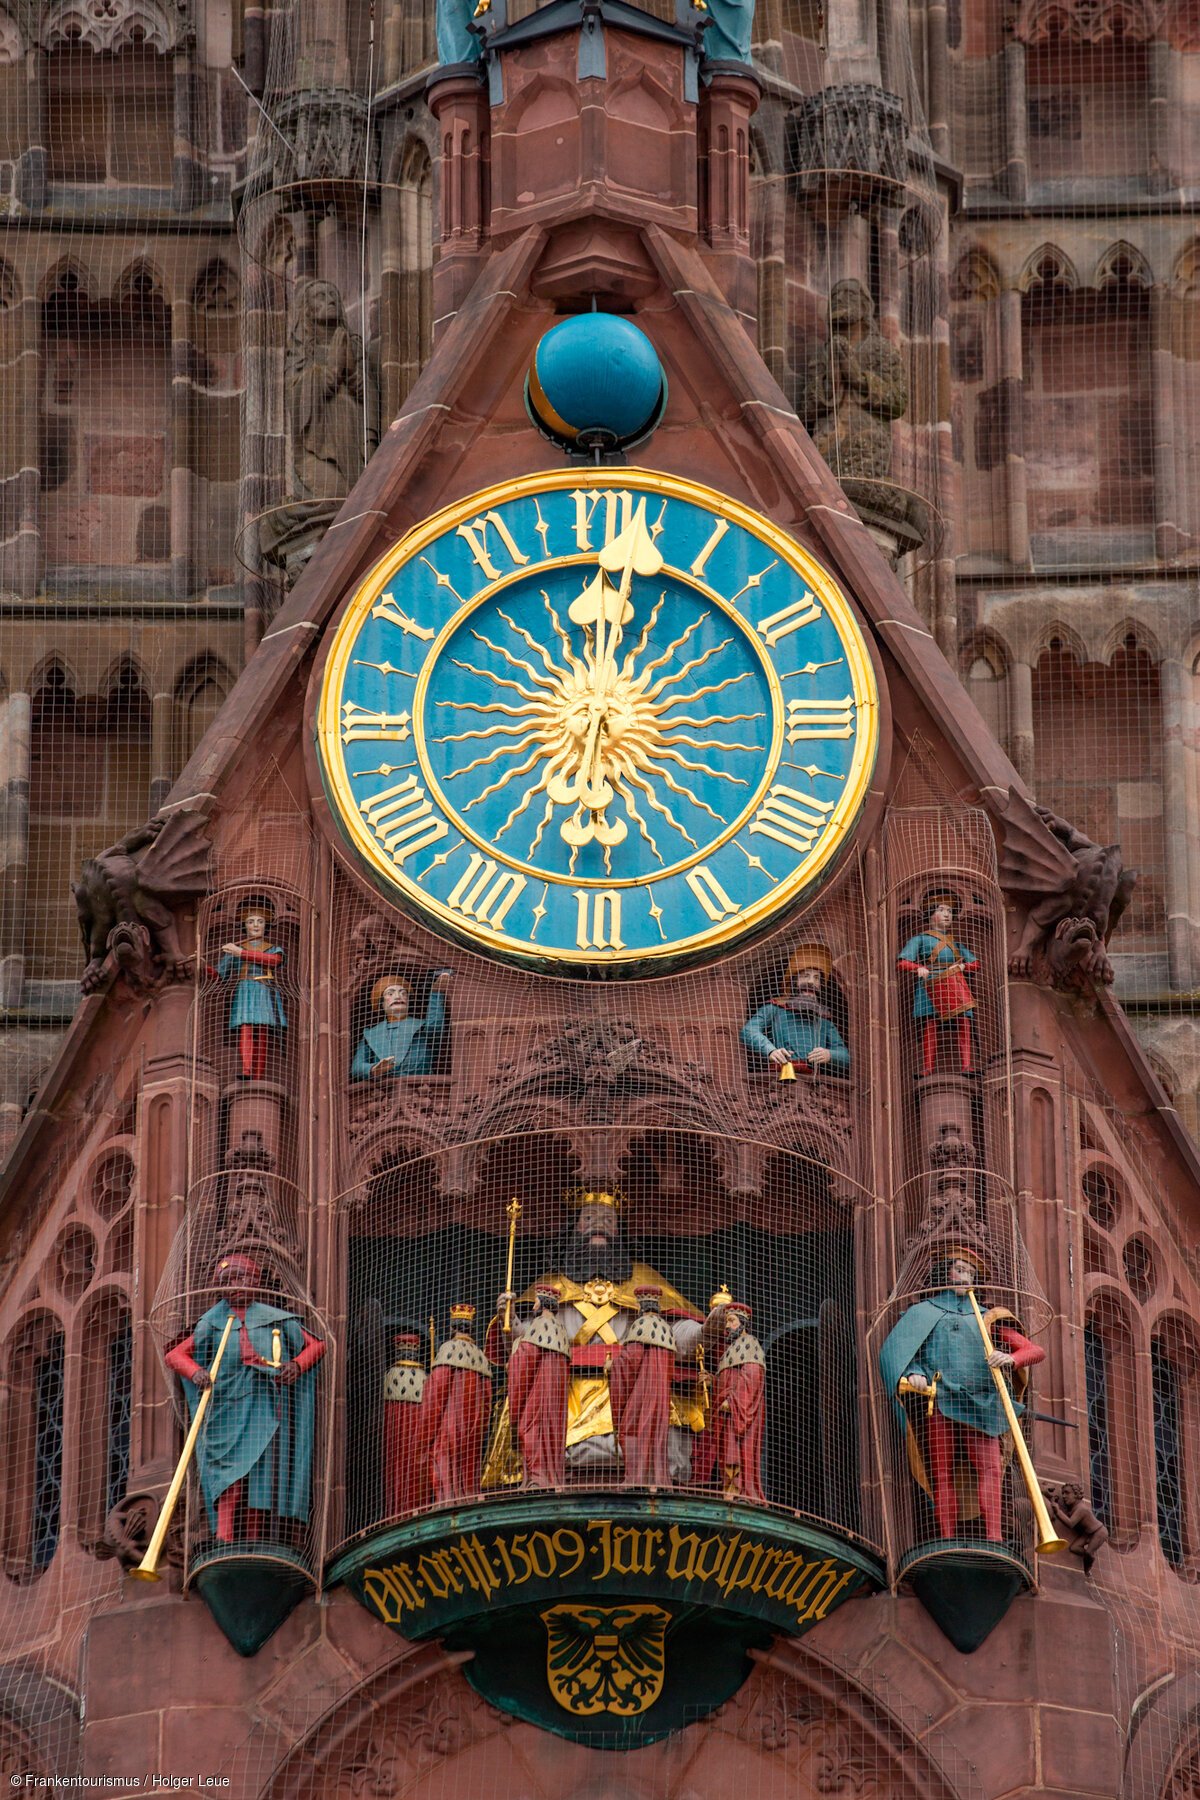 "Männleinlaufen" an der Frauenkirche, Hauptmarkt (Nürnberg/Sädteregion Nürnberg)